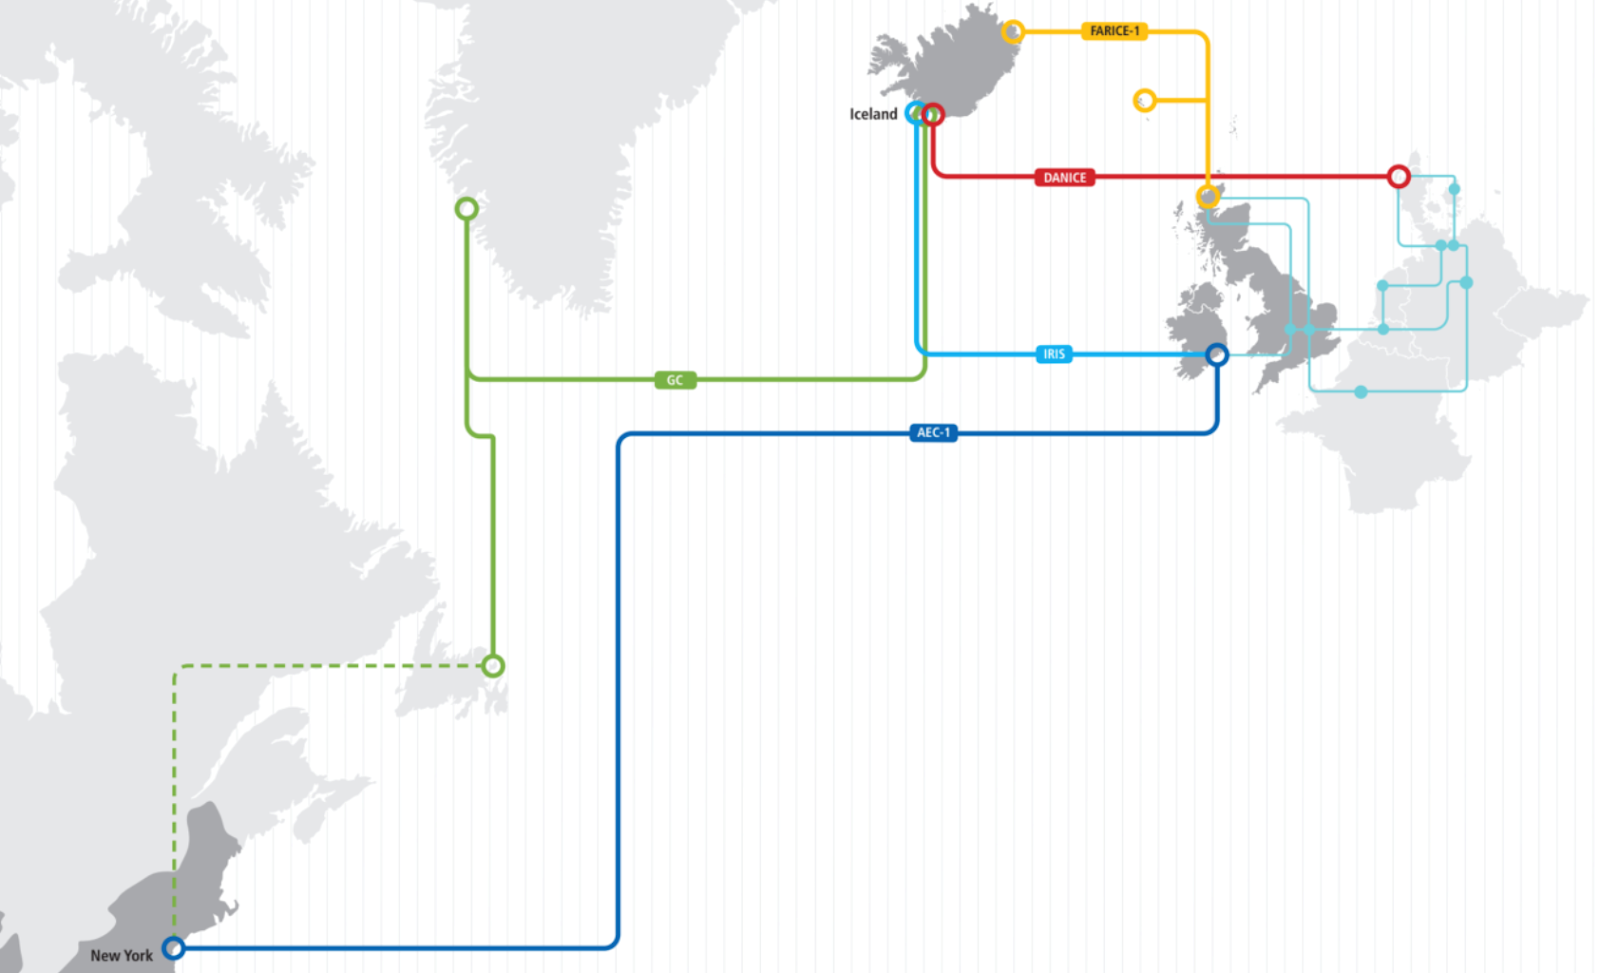 Iceland data centers service range